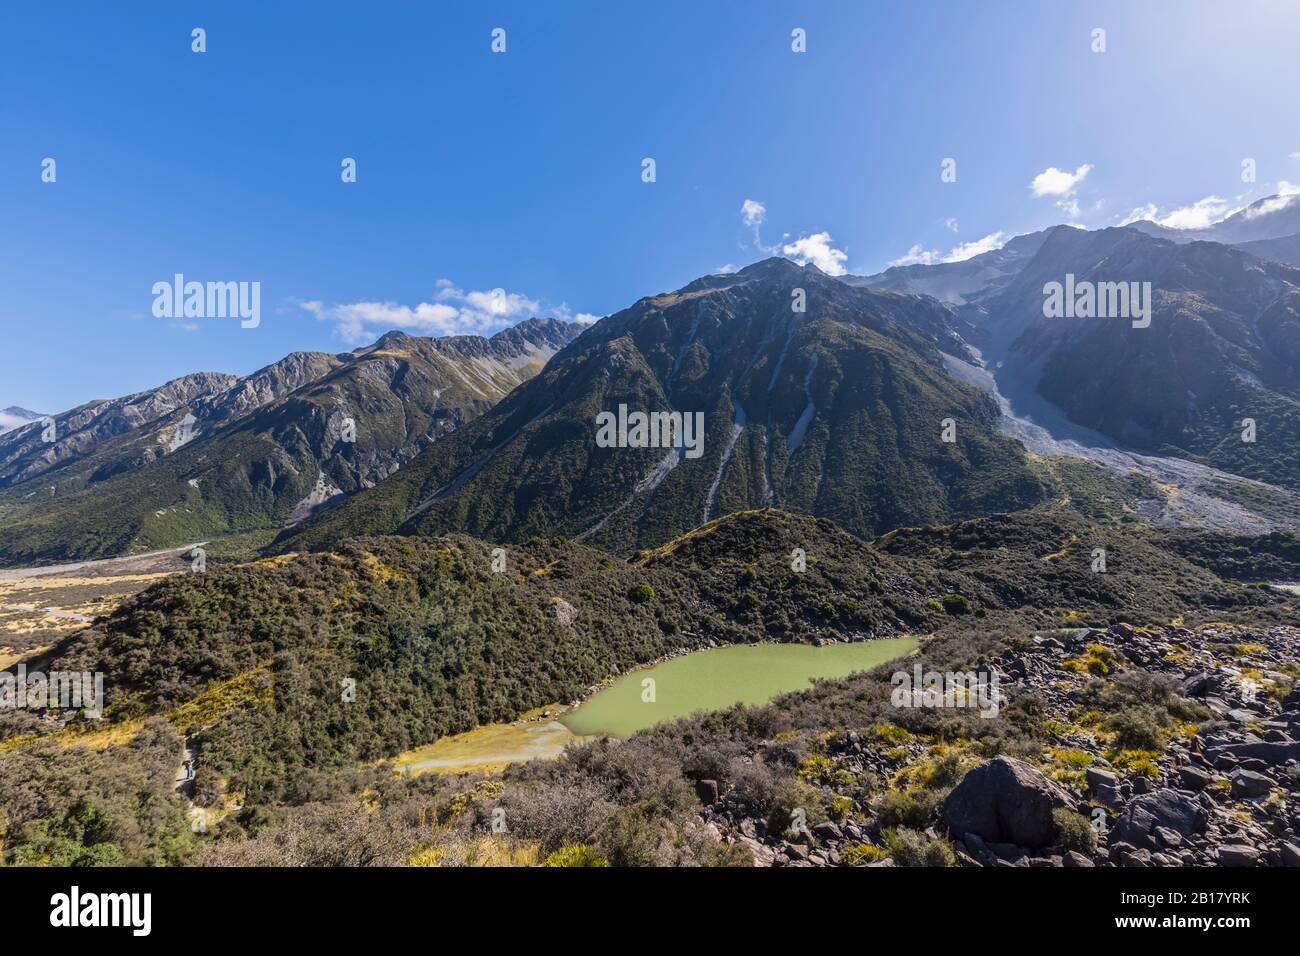 New Zealand, Oceania, South Island, Canterbury, Ben Ohau, Southern Alps (New Zealand Alps), Mount Cook National Park, Tasman Glacier Viewpoint, Blue Lake Stock Photo